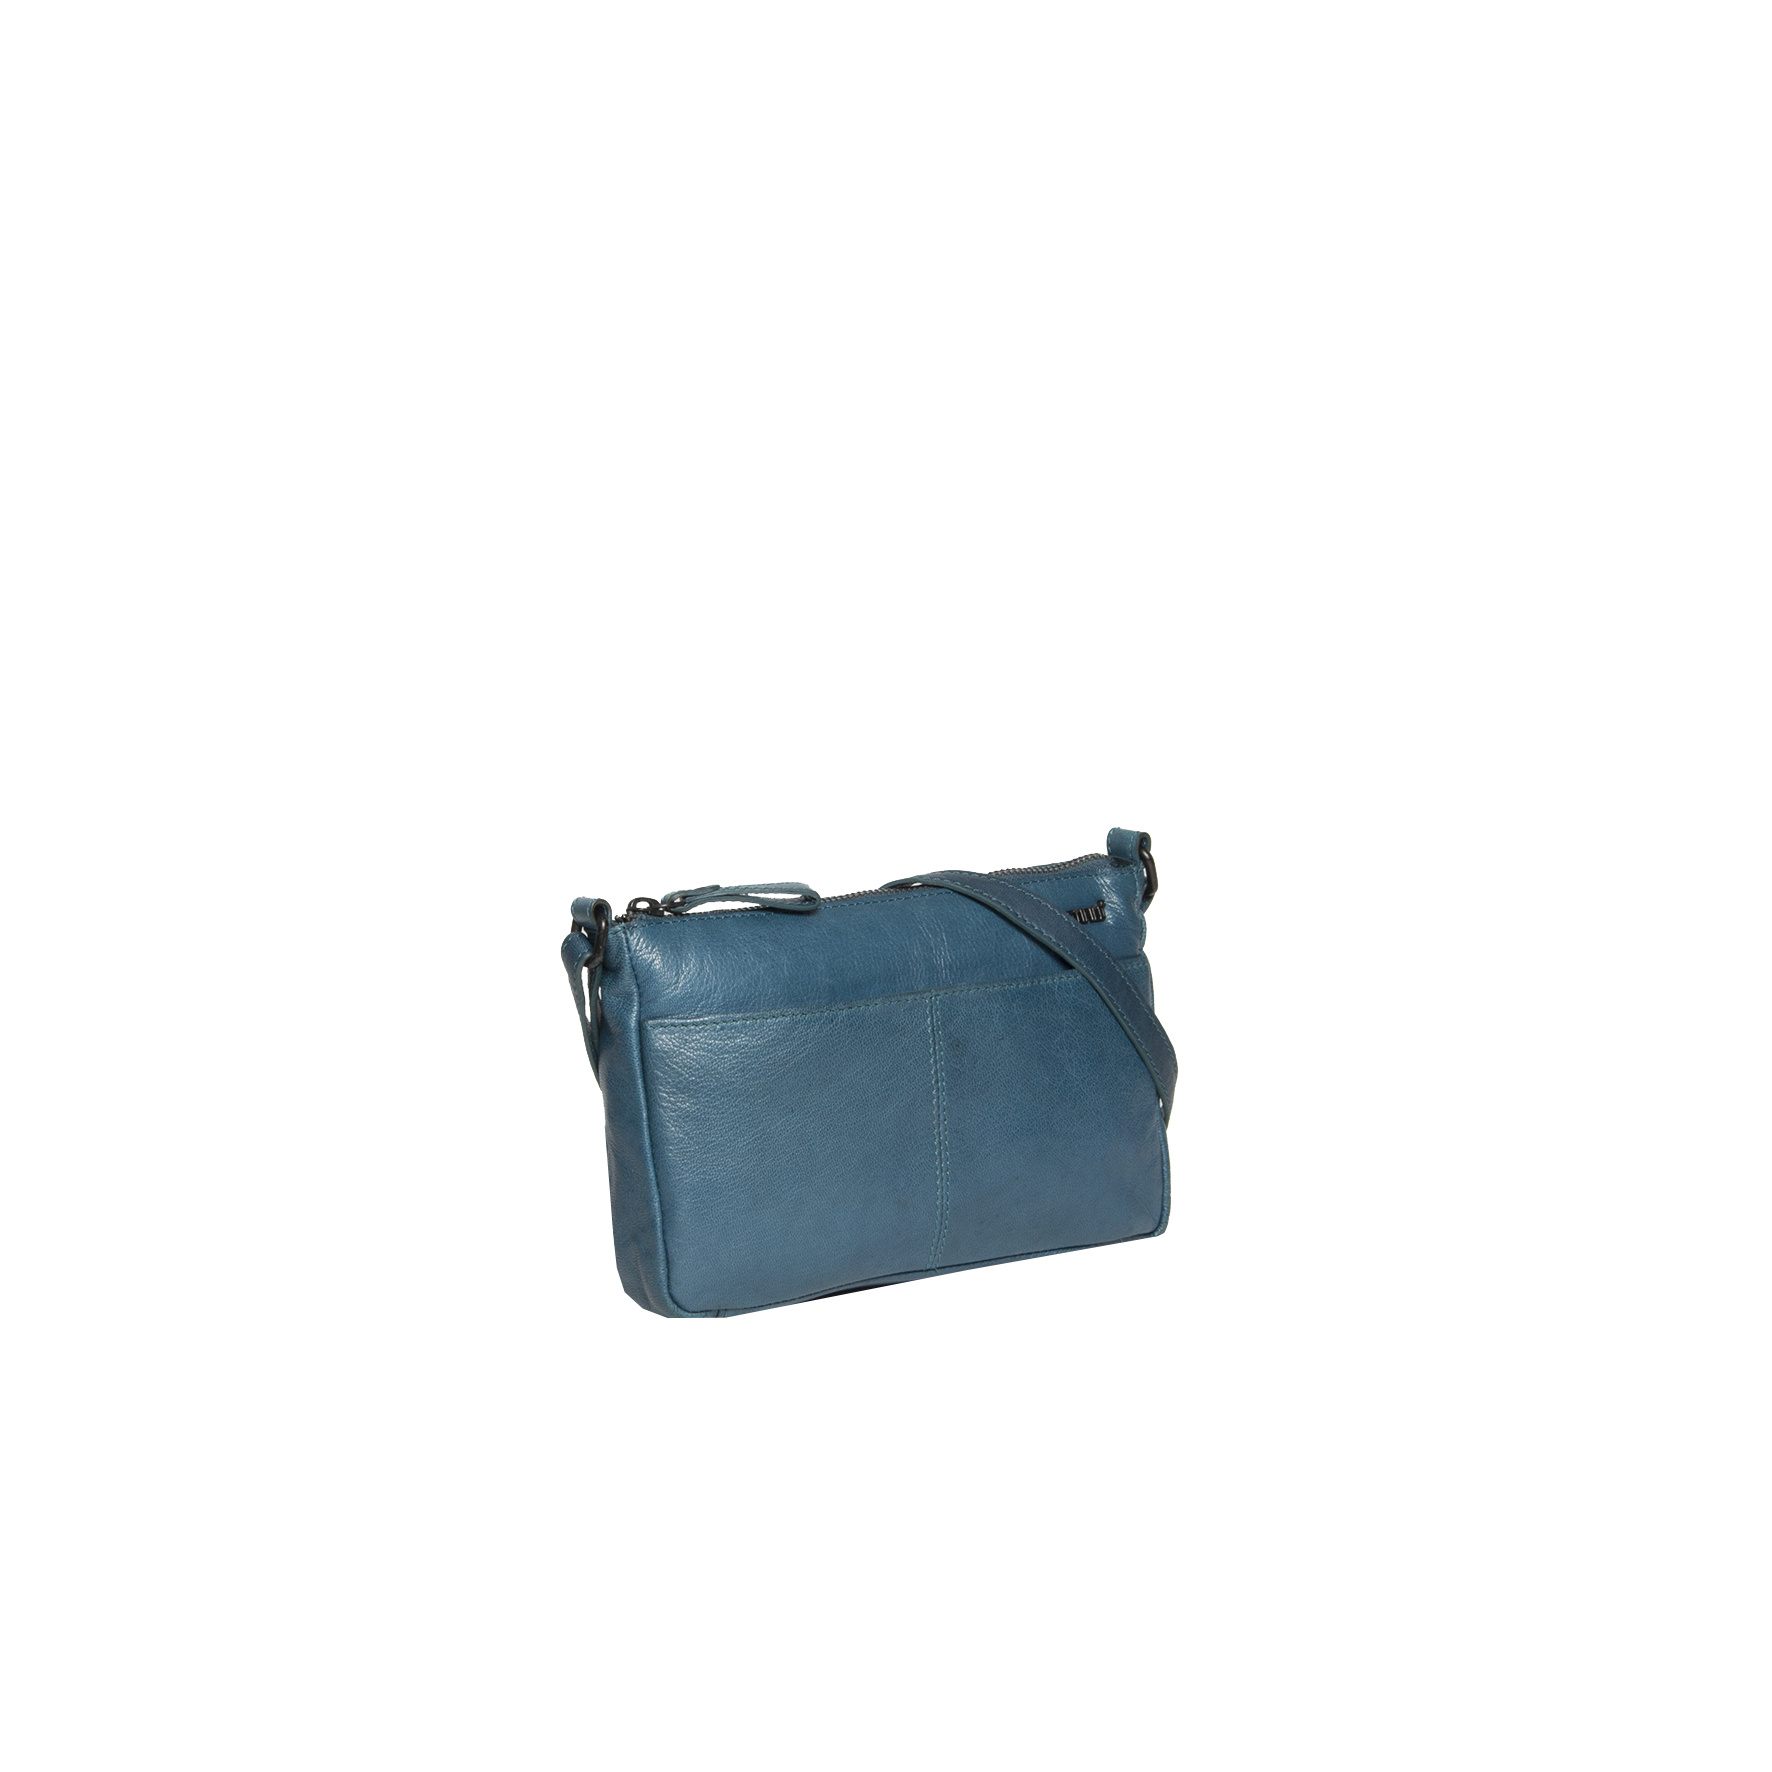 Justified Bags Belukha Small Top Zip Front Pocket Shoulderbag Ocean Blue